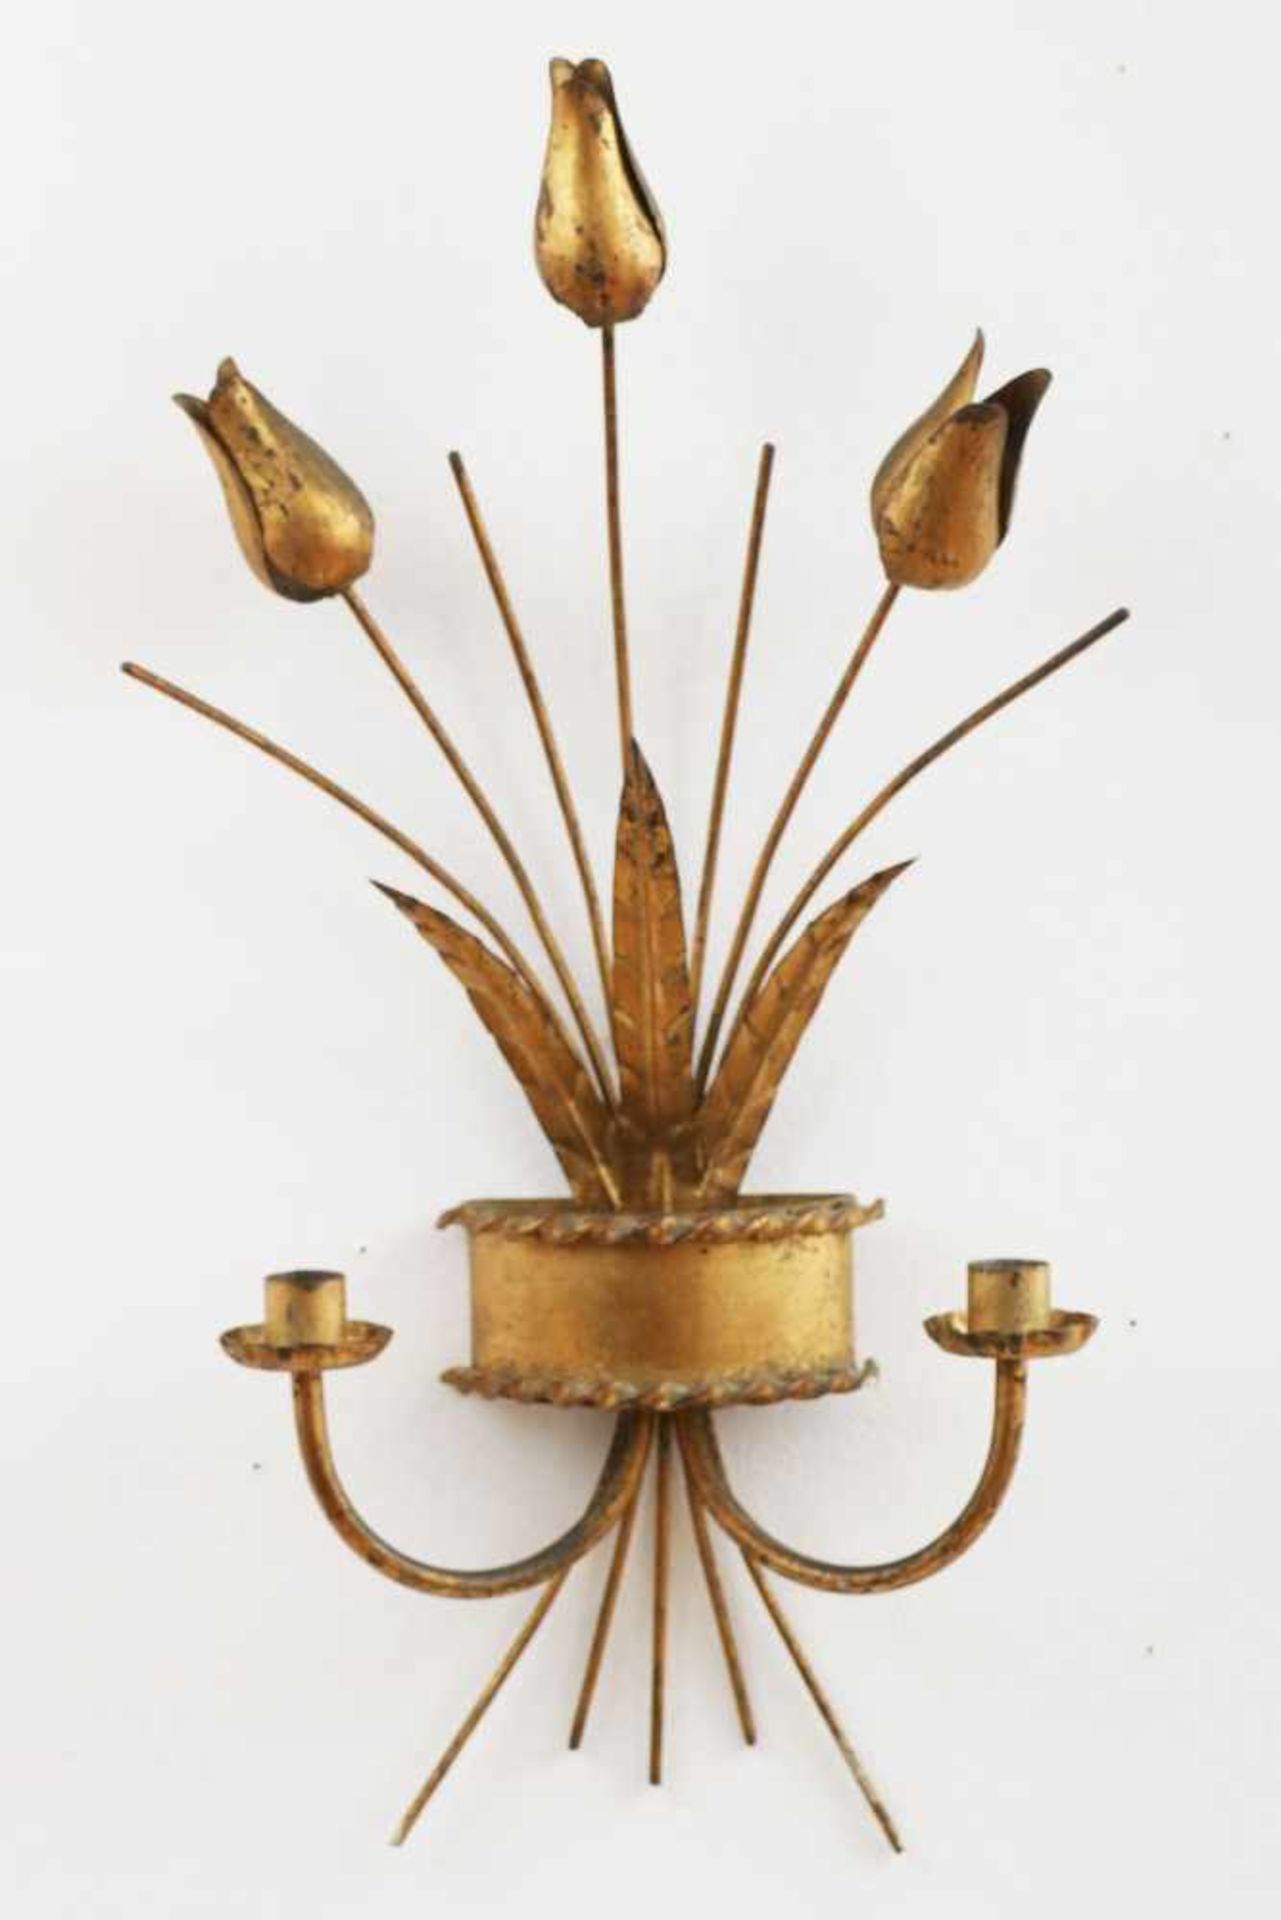 Wandapplike ¨3 Blüten¨ Mid centurywohl Italien, Metall, vergoldet, mit 2 geschwungenen Leuchterarmen